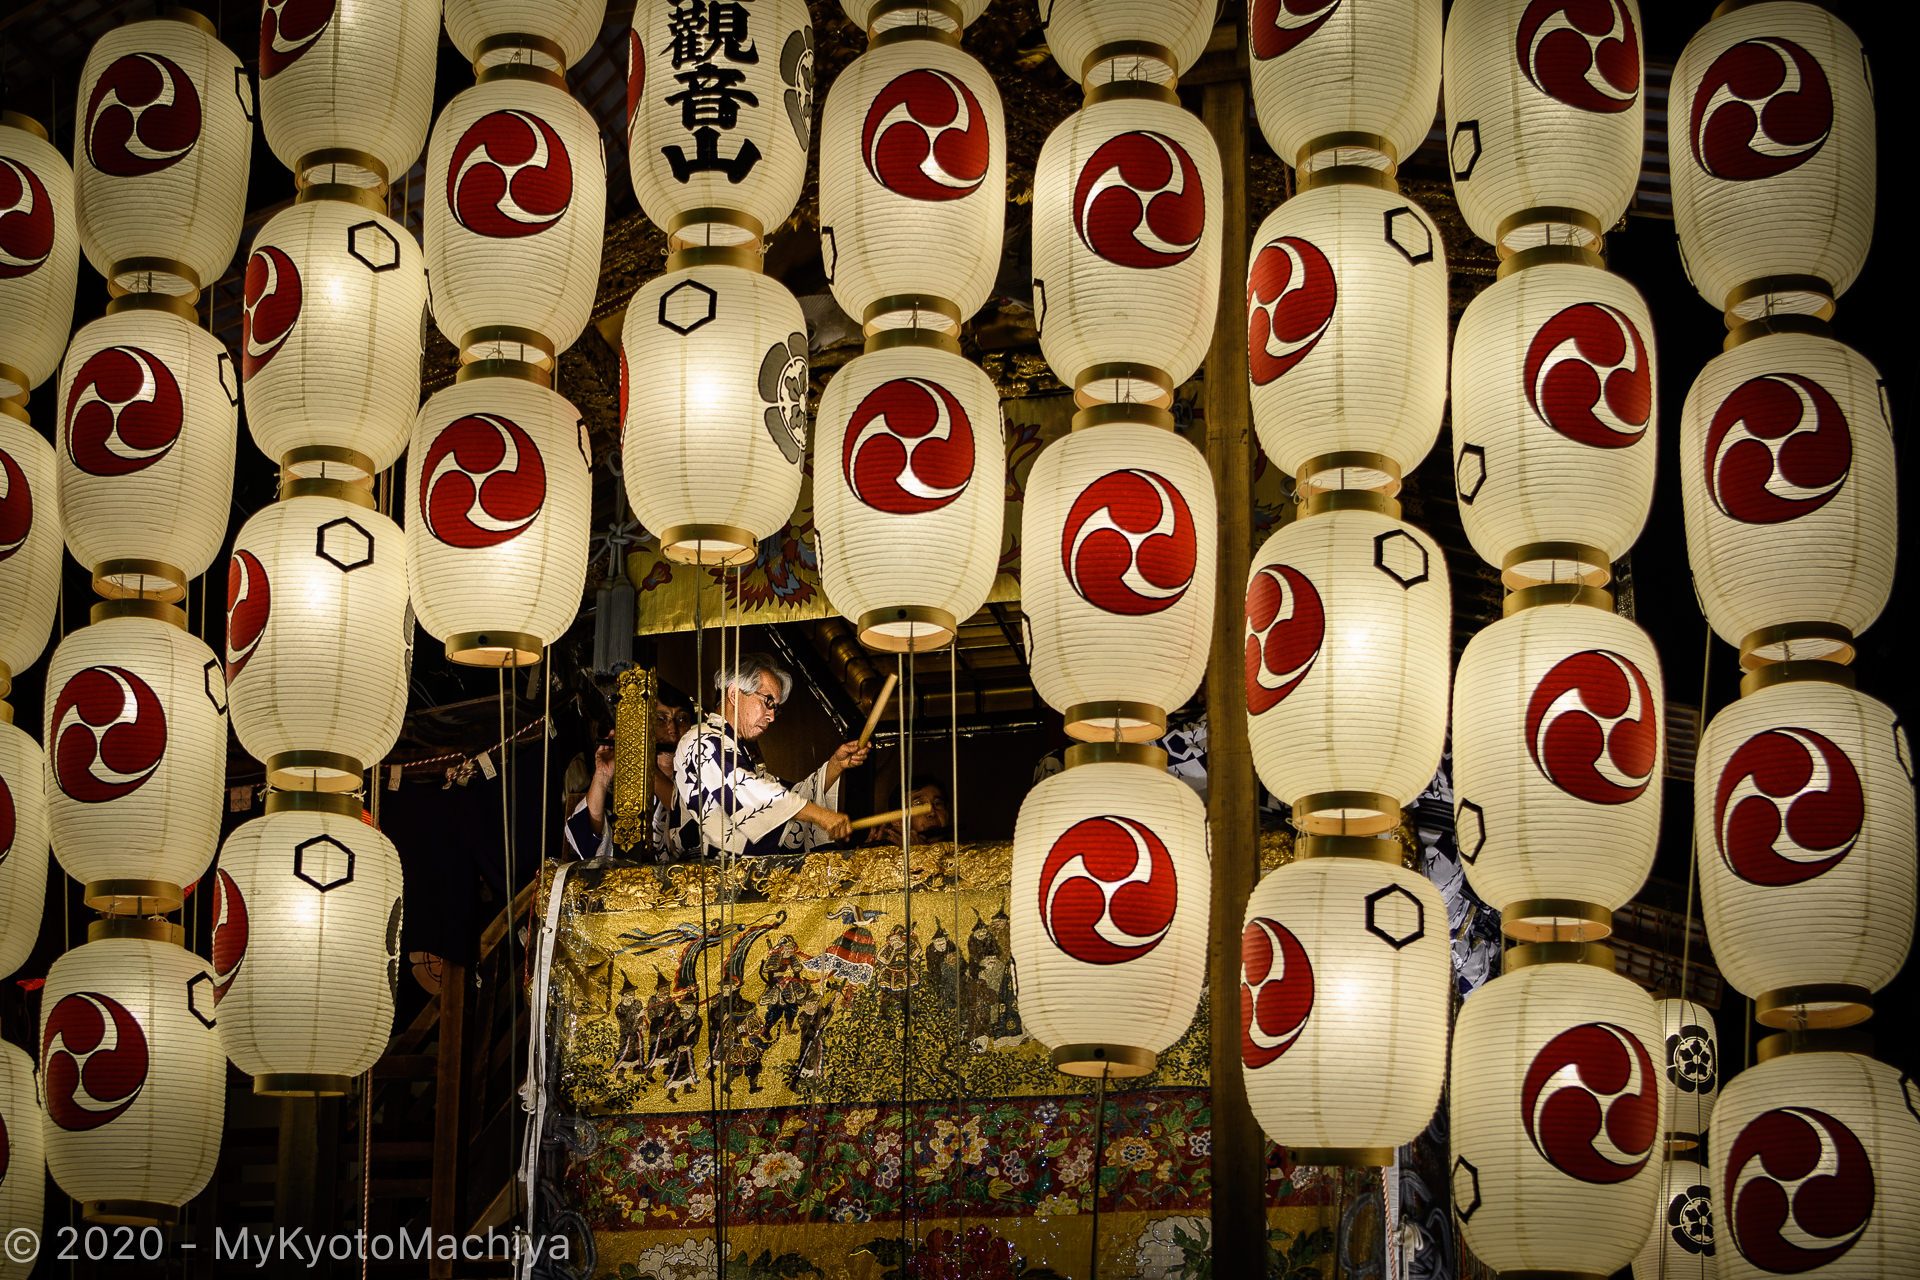 The Kita-Kannon Yama float during the Yoi-Yama evening, Gion Mat